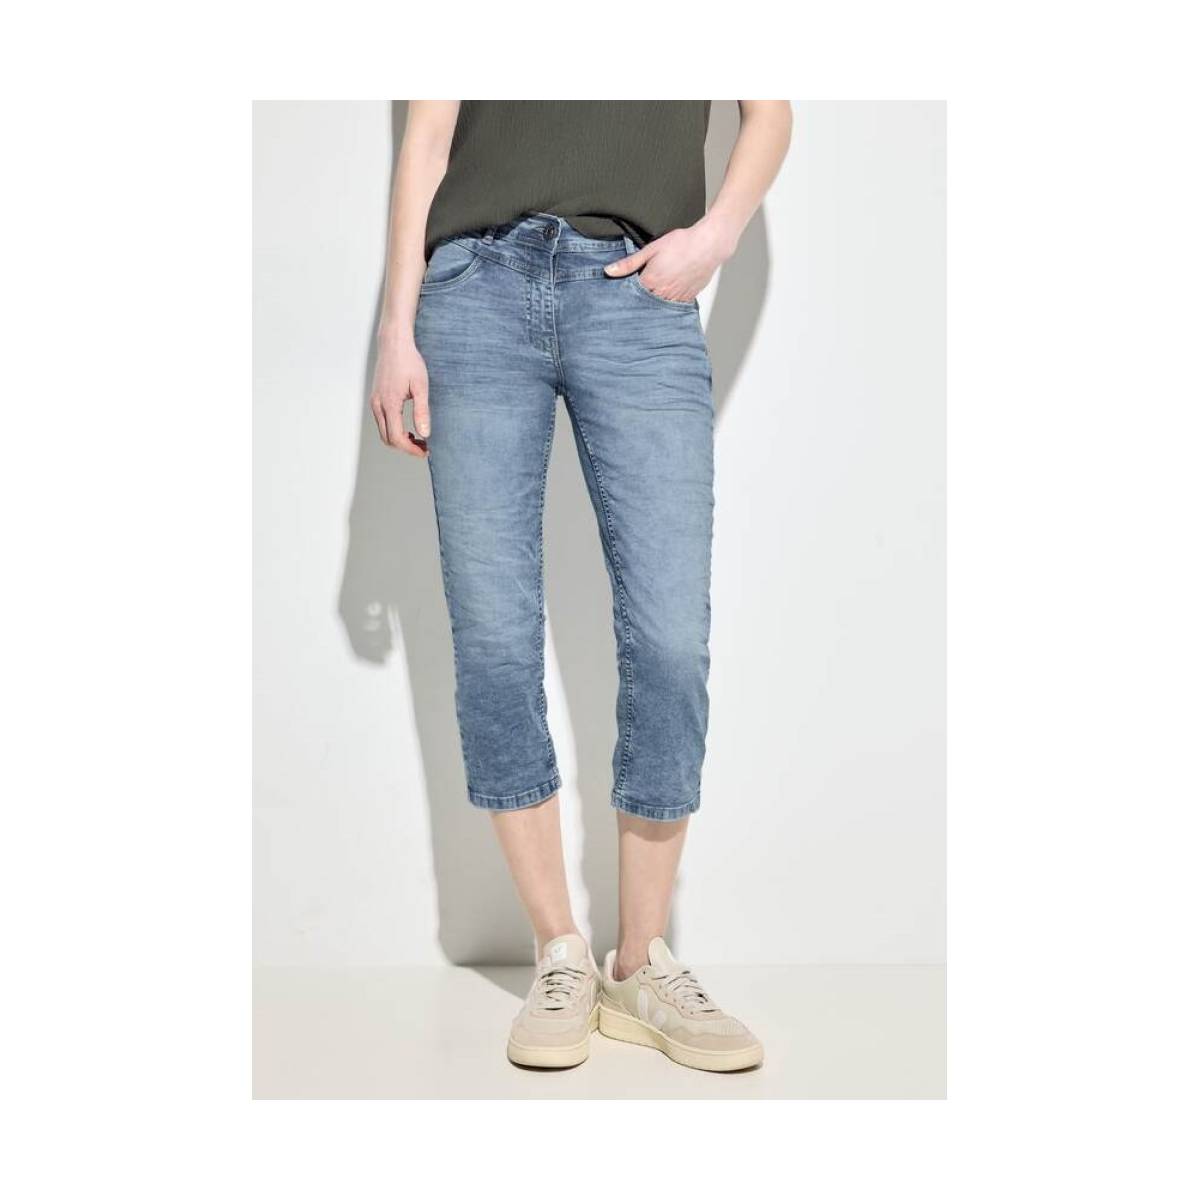 CECIL  broeken lichte jeans -  model b377183 - Dameskleding broeken jeans